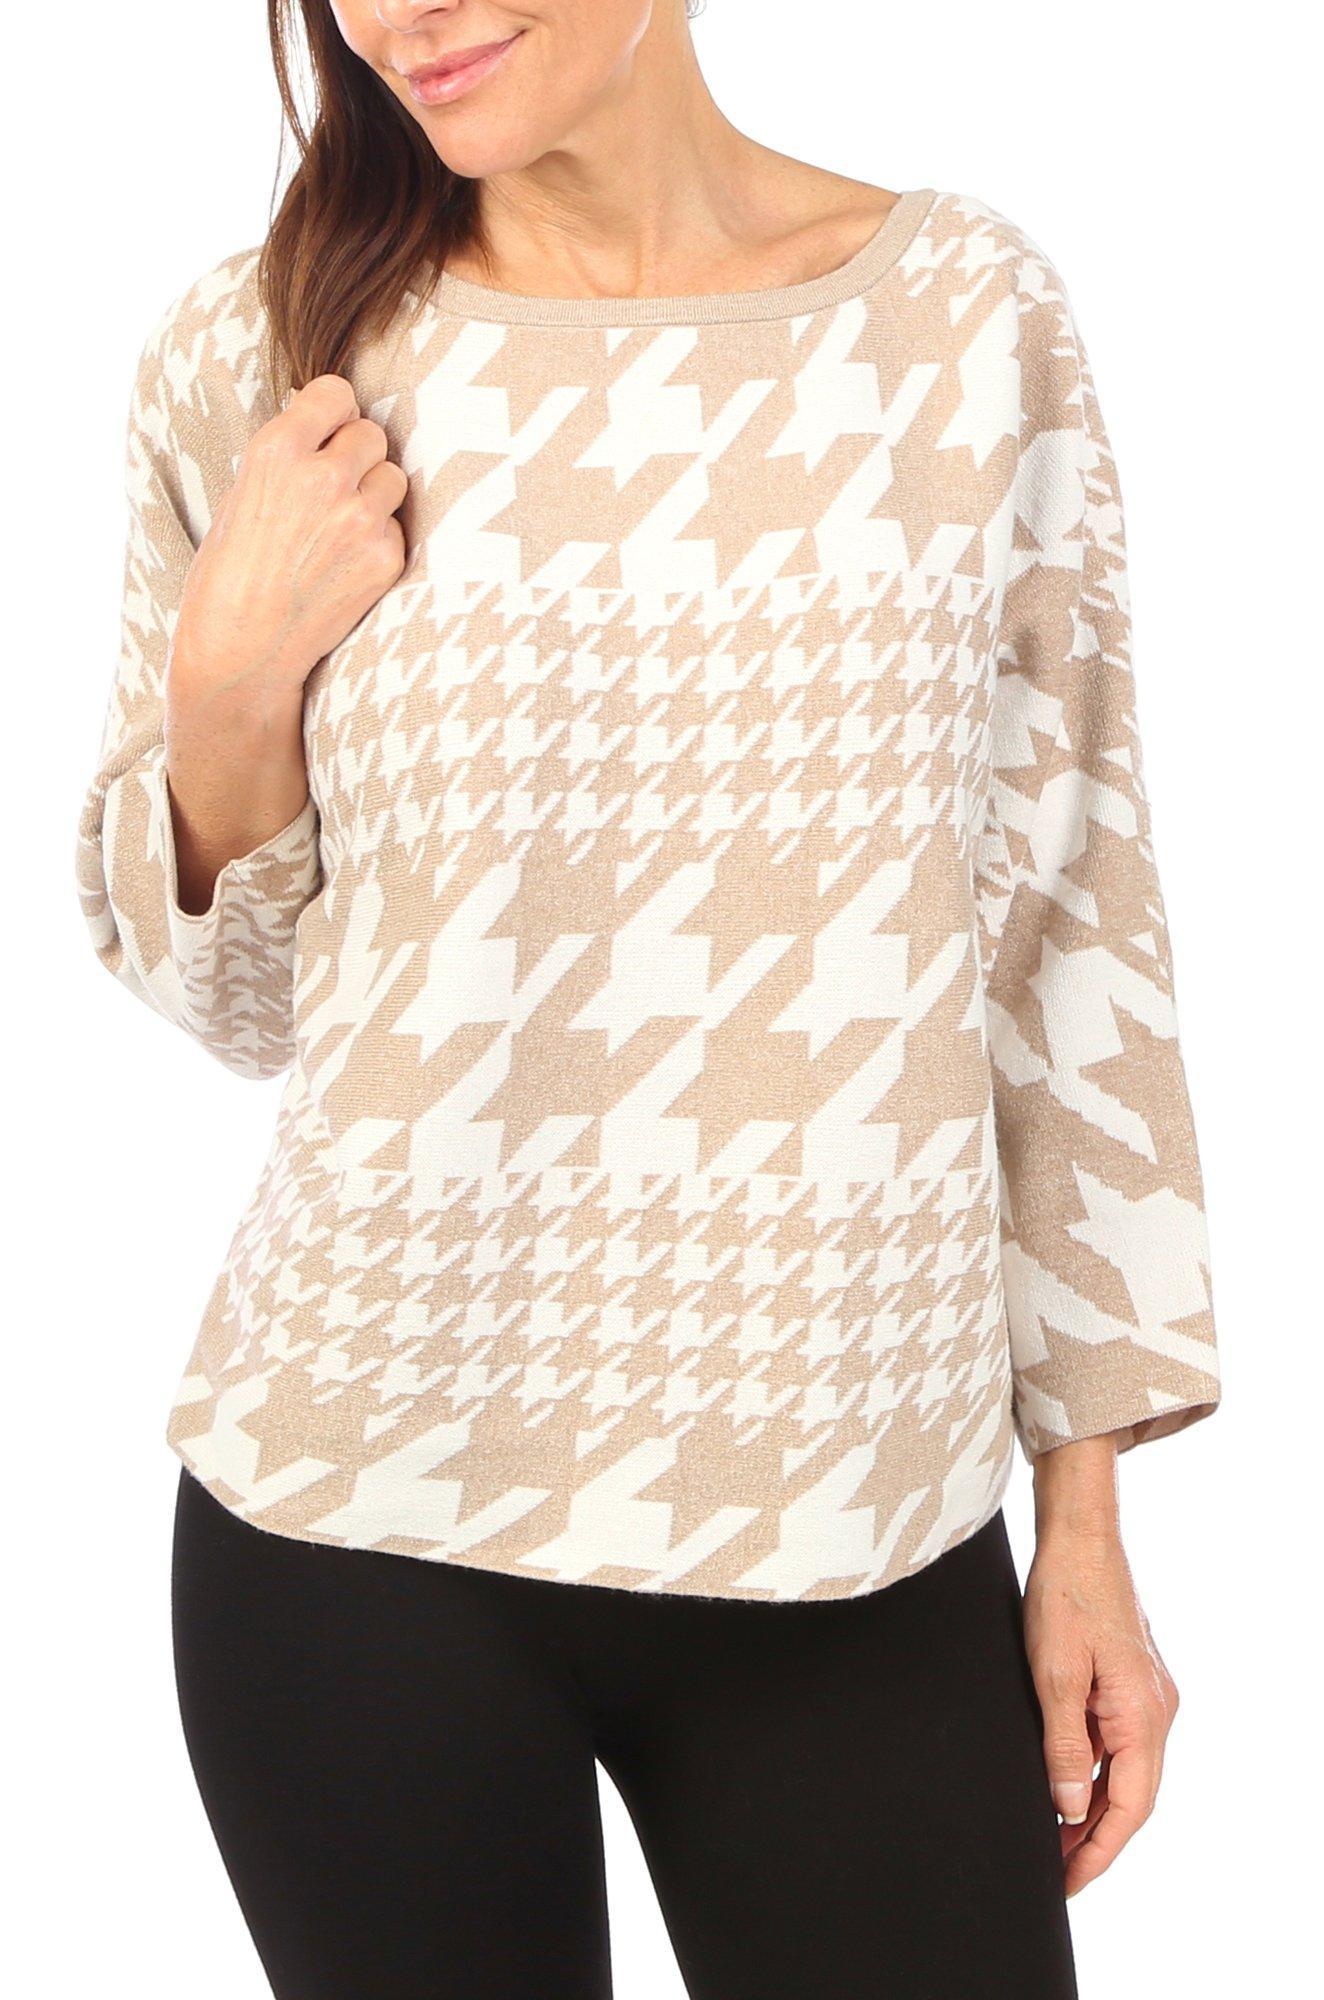 Women's Houndstooth Print Sweater - Tan